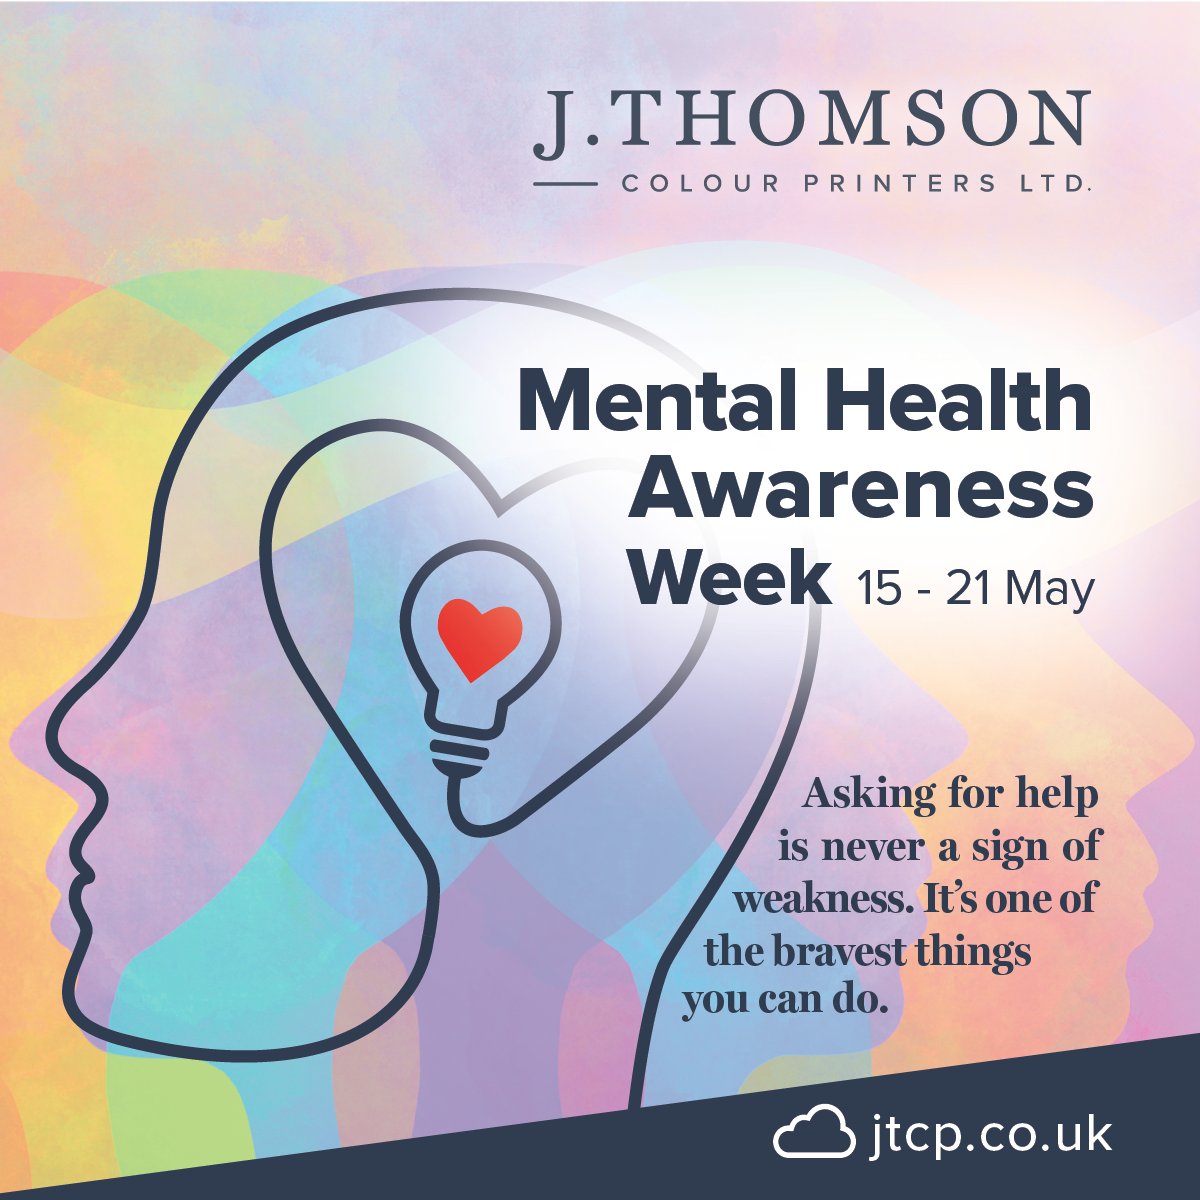 Mental Health Awareness Week 15th - 21st May
#jtcp #cmyk #print #mentalhealth #mentalhealthsupport #mentalhealthweek #endthestigmaofmentalhealth #mentalwellness #mentalwellbeing